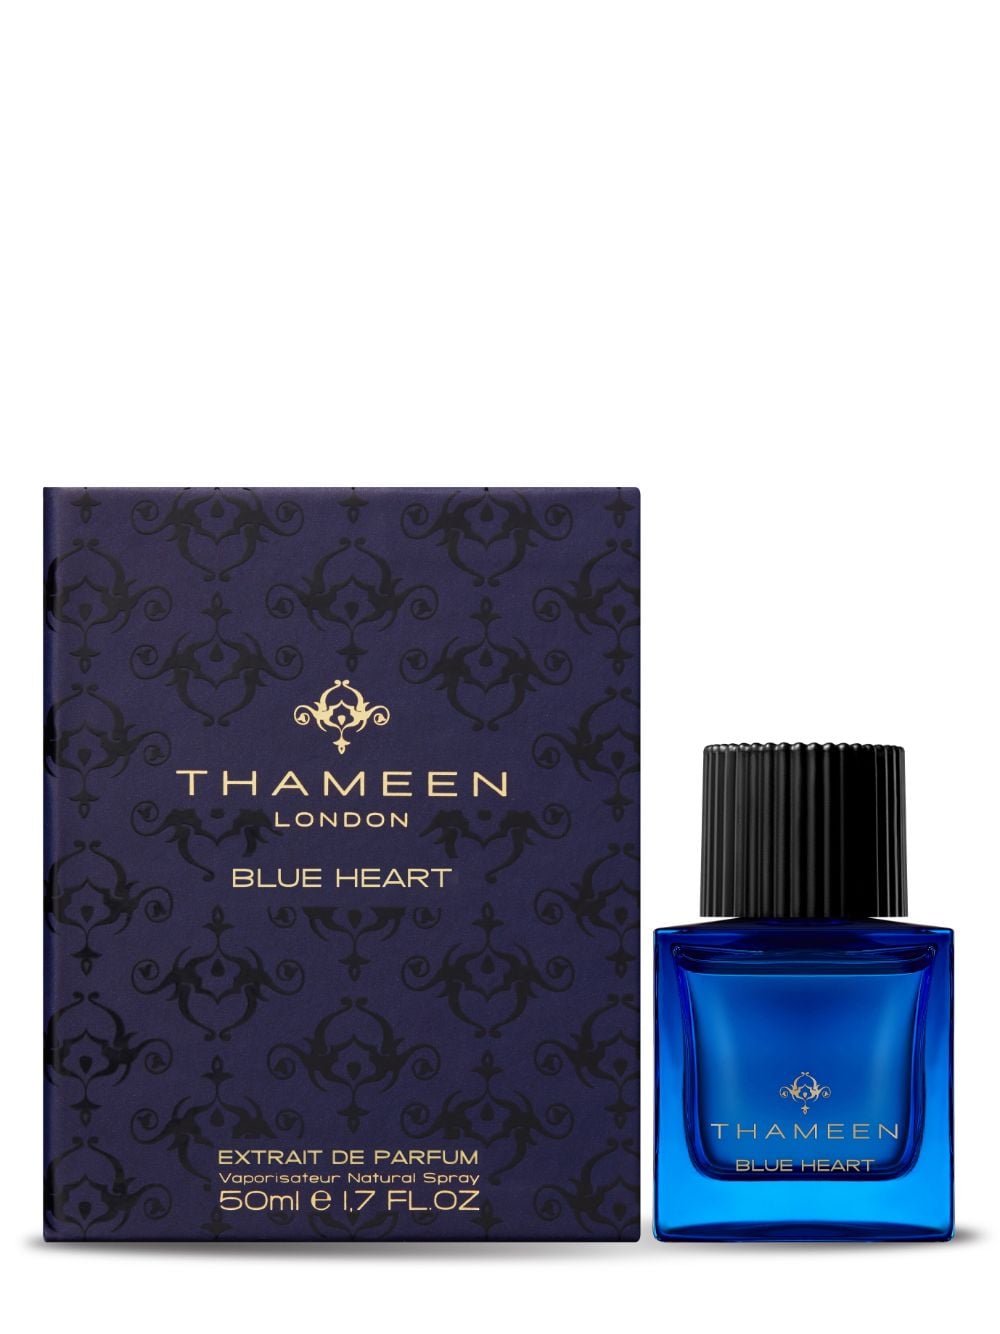 Thameen London Blue Heart eau de parfum - NEUTRAL